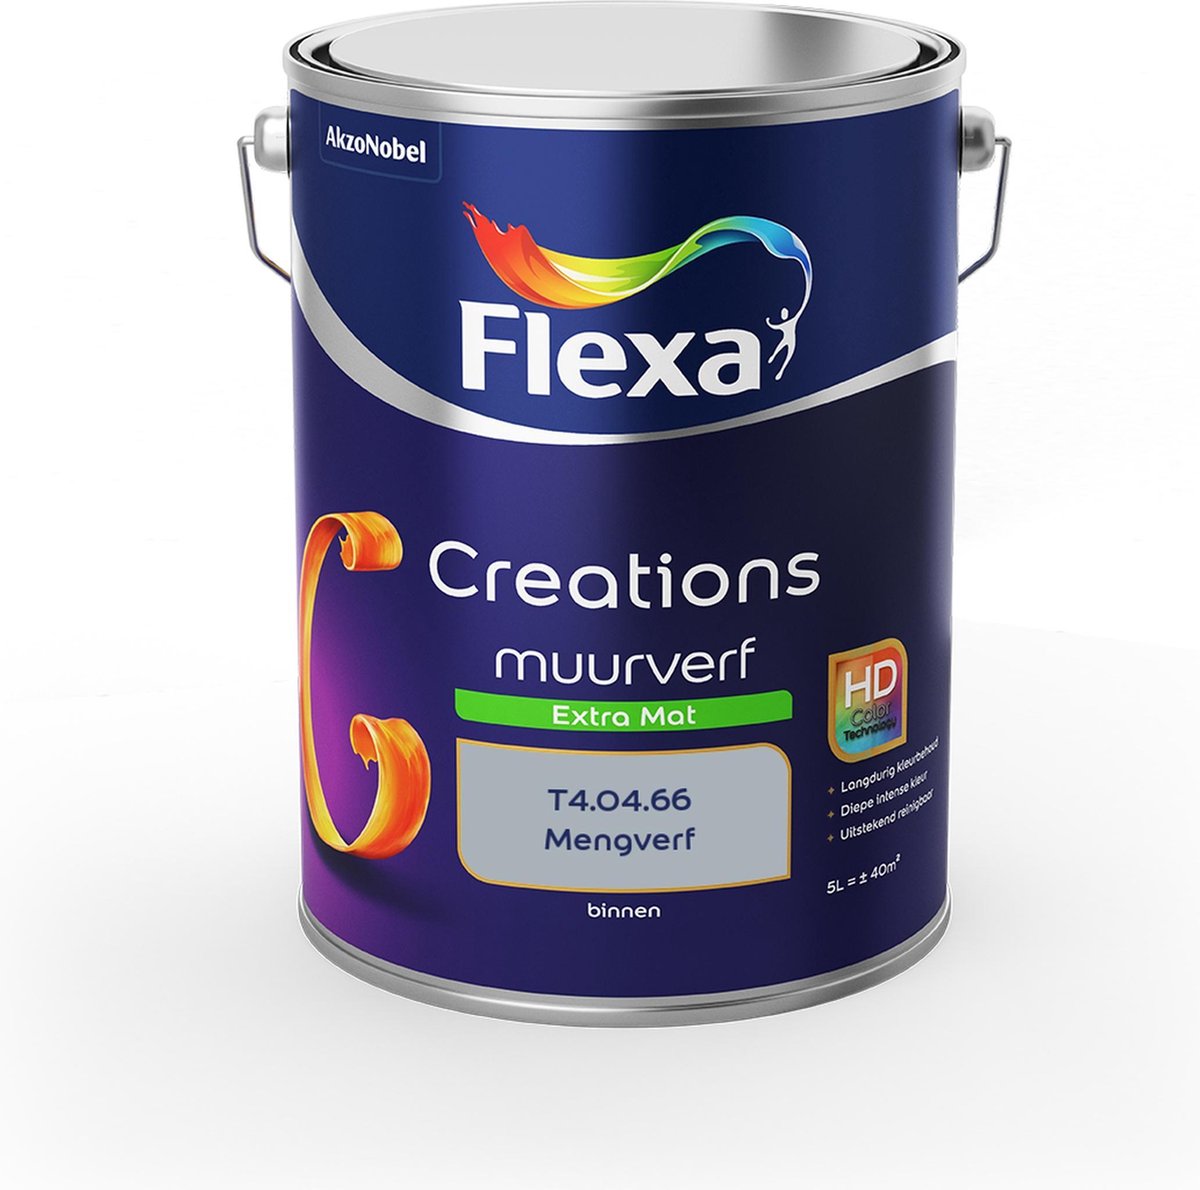 Flexa Creations Muurverf - Extra Mat - Colorfutures 2019 - T4.04.66 - 5 liter